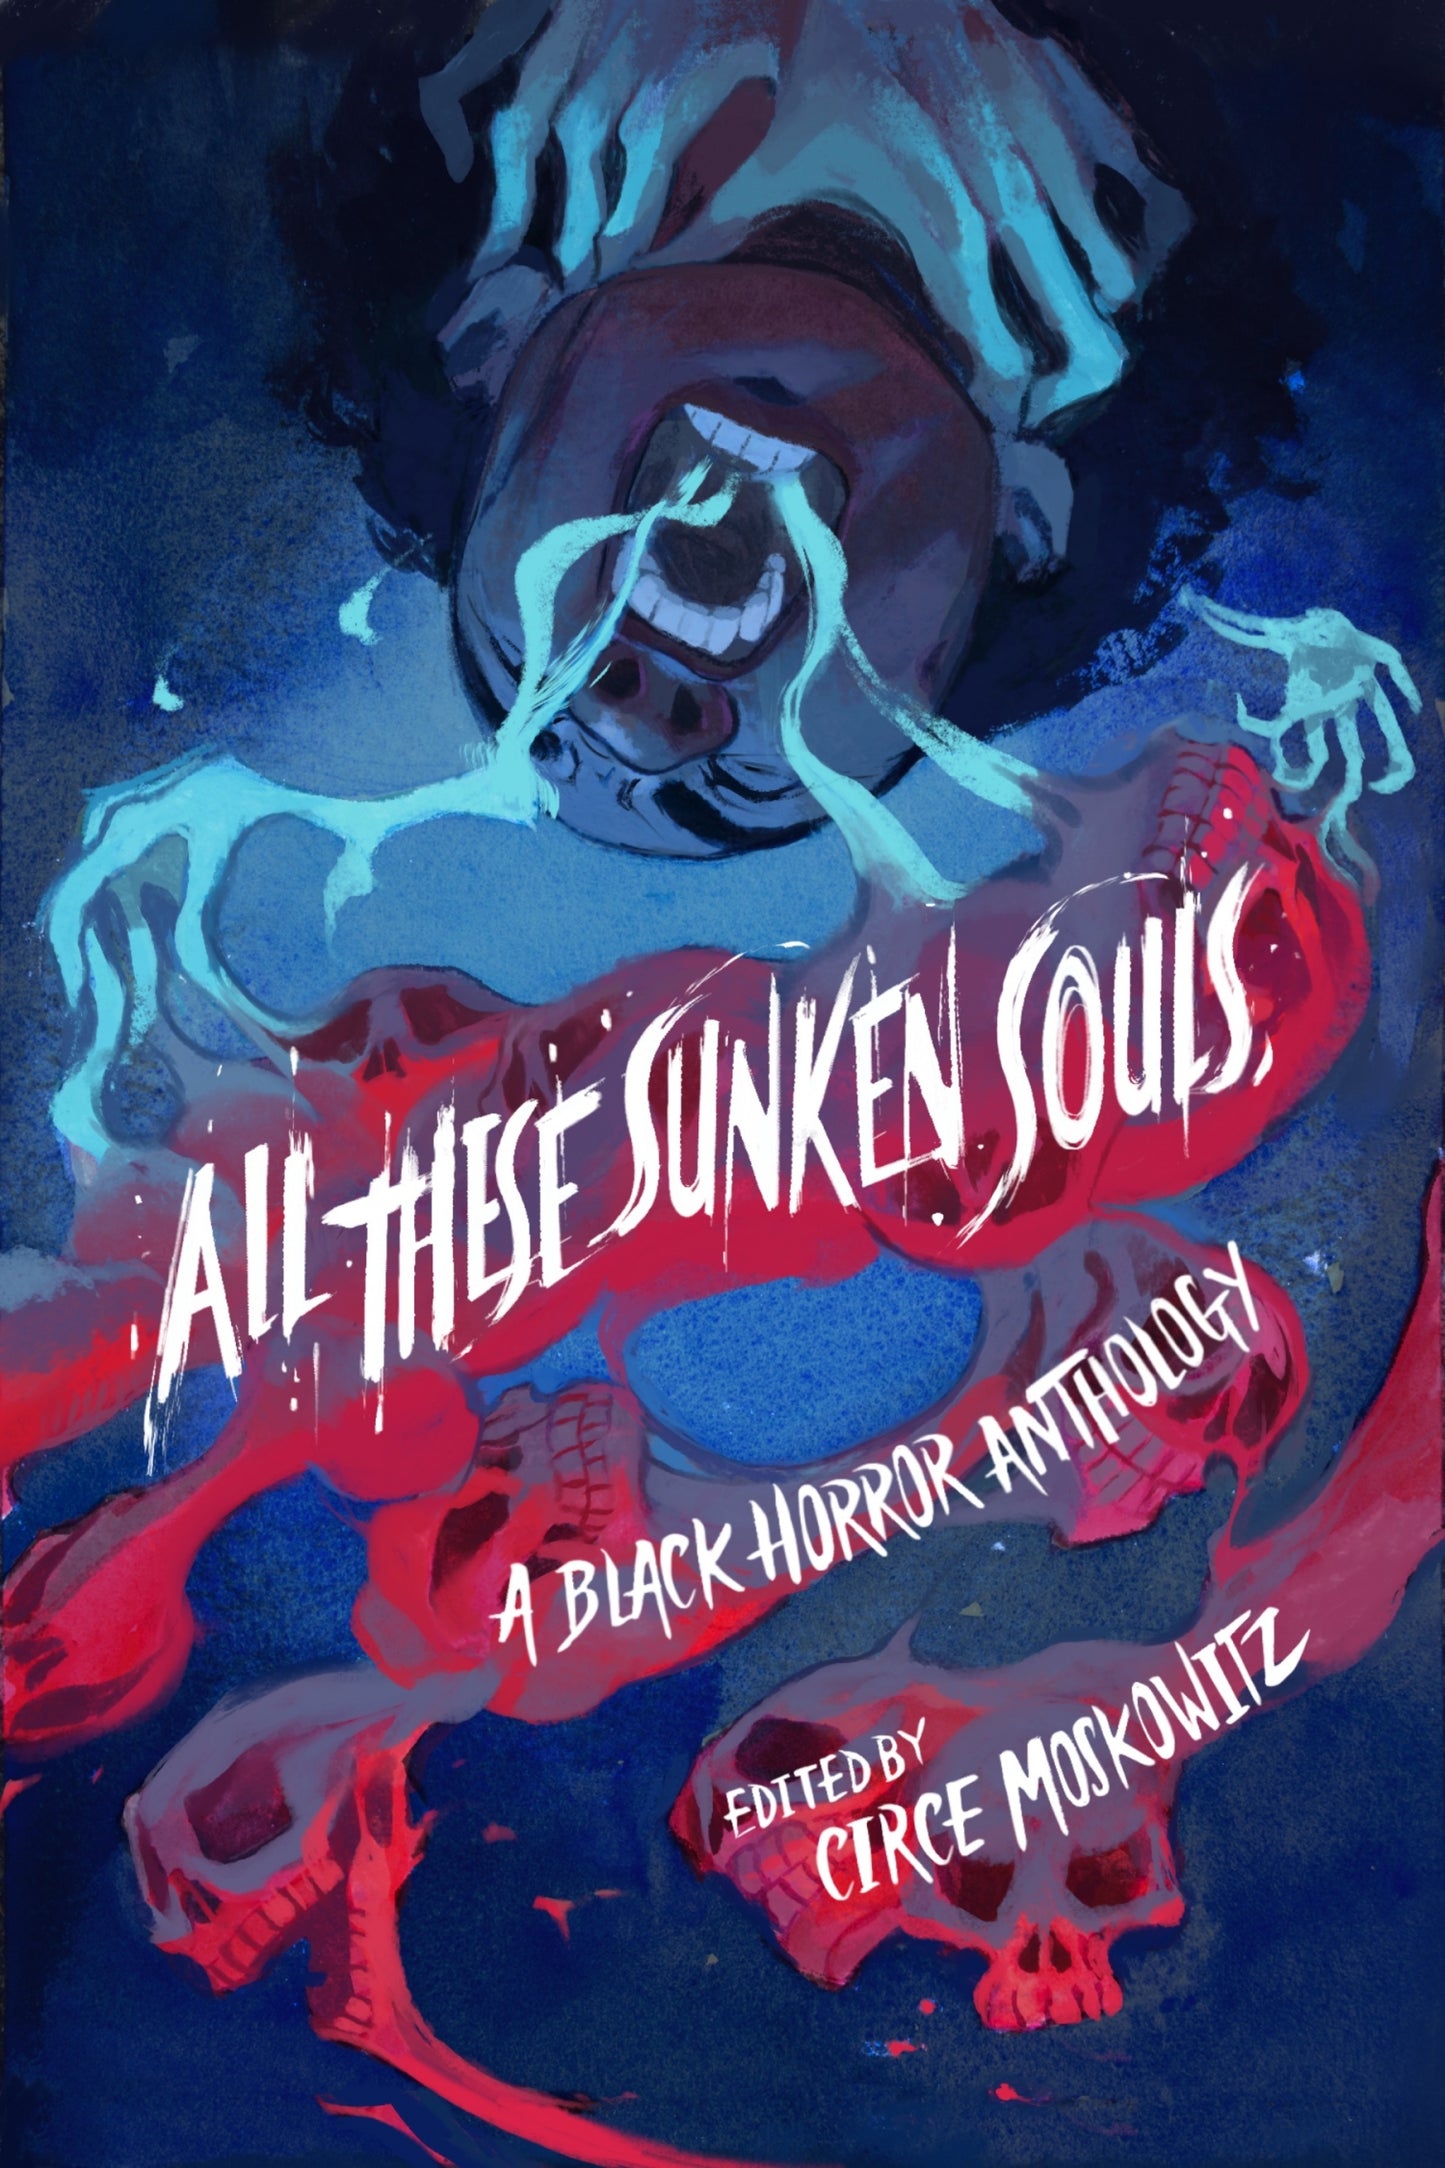 All These Sunken Souls // A Black Horror Anthology